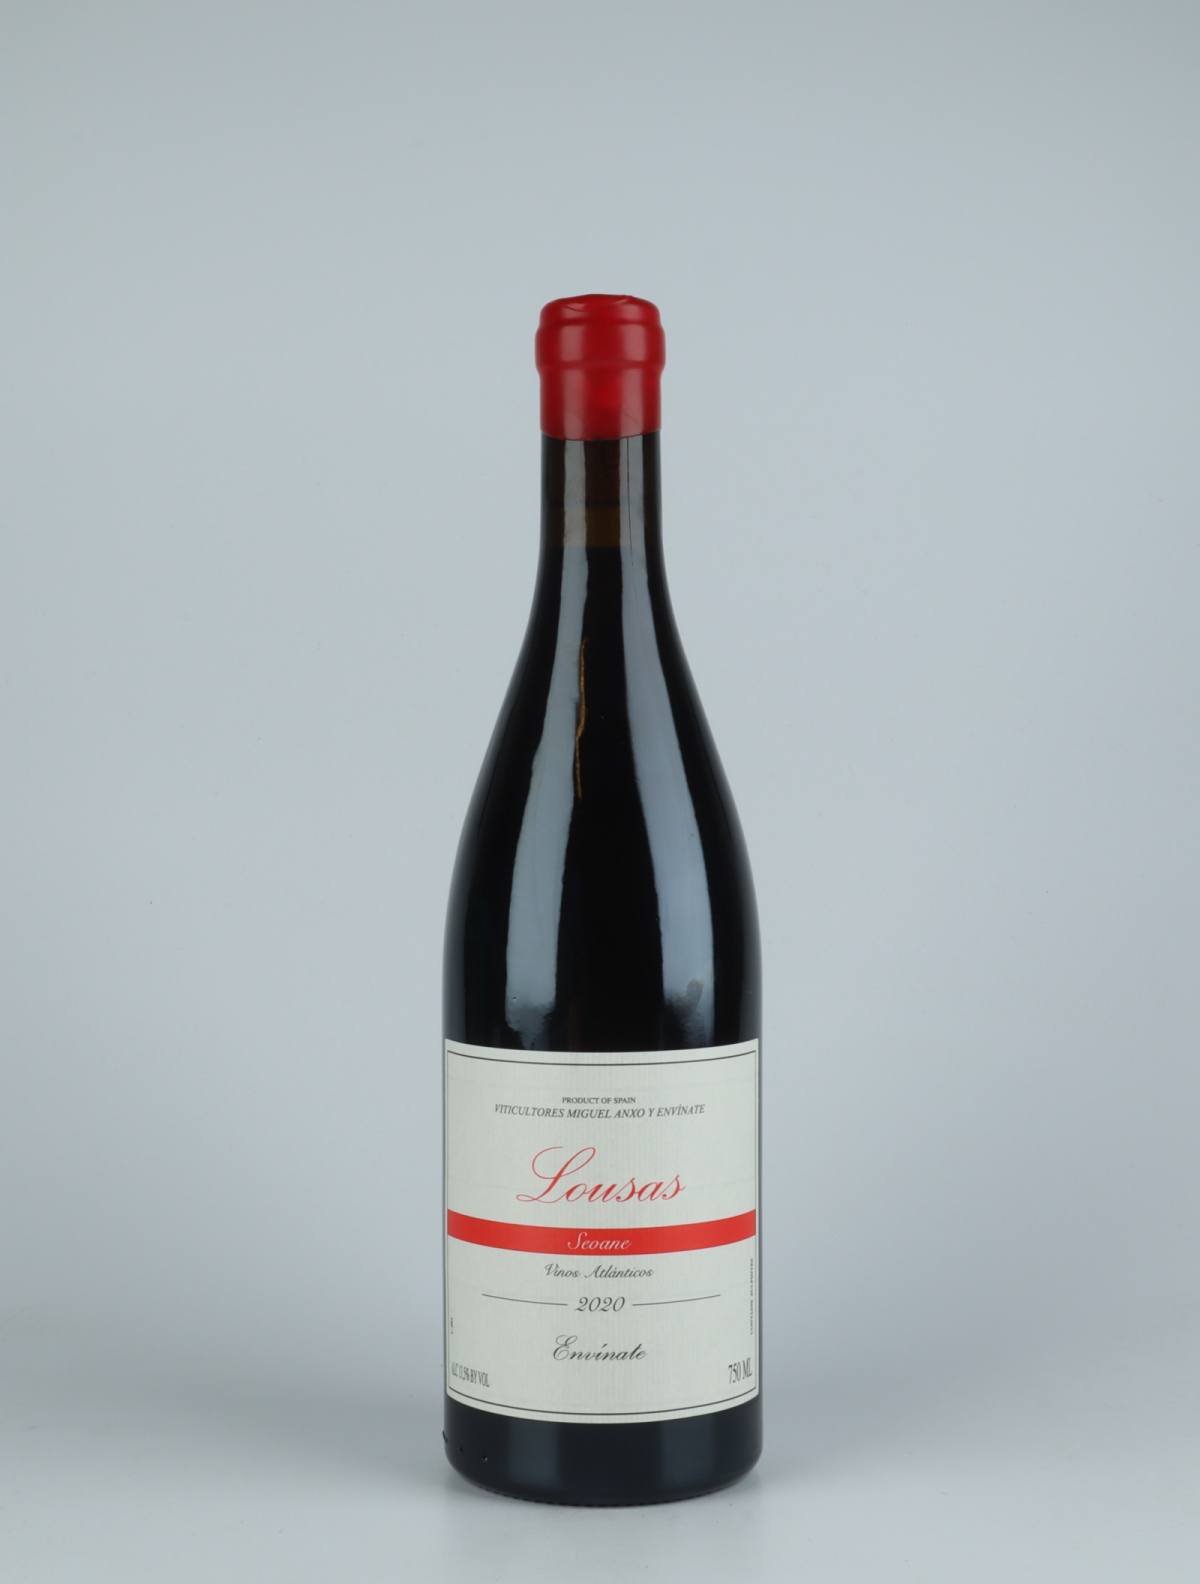 A bottle 2020 Lousas Parcela Seoane - Ribeira Sacra Red wine from Envínate, Ribeira Sacra in Spain